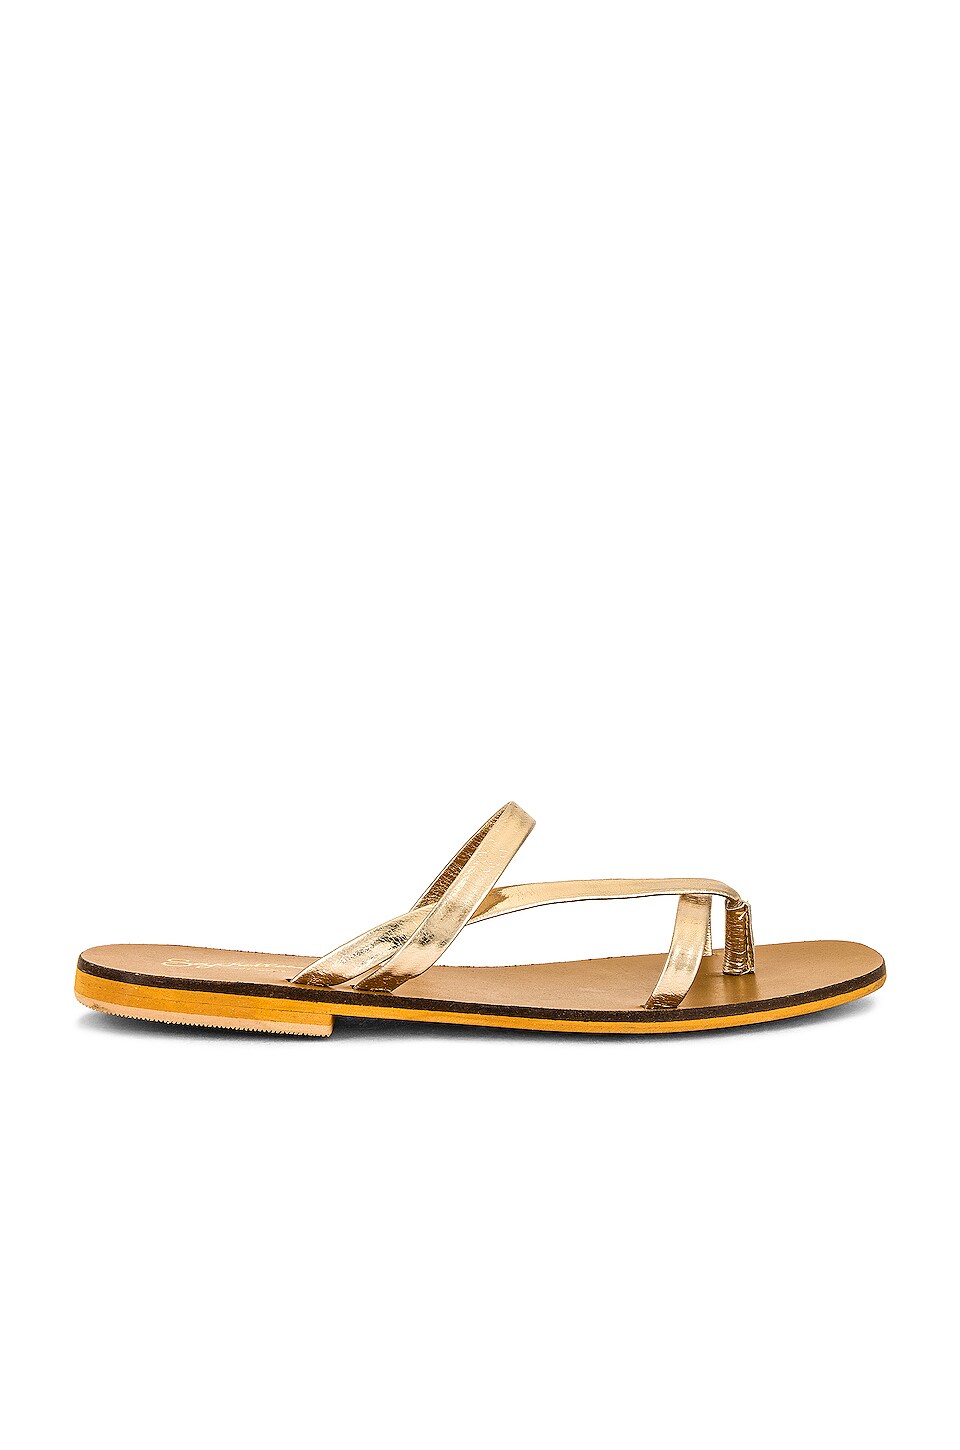 Seychelles LaidBack Sandal Light Gold Leather